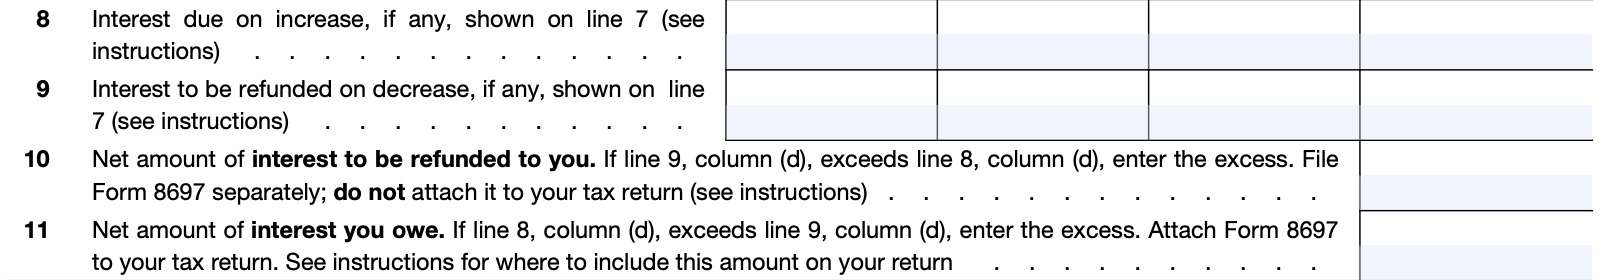 part ii: simplified marginal impact method, line 8 through line 11 